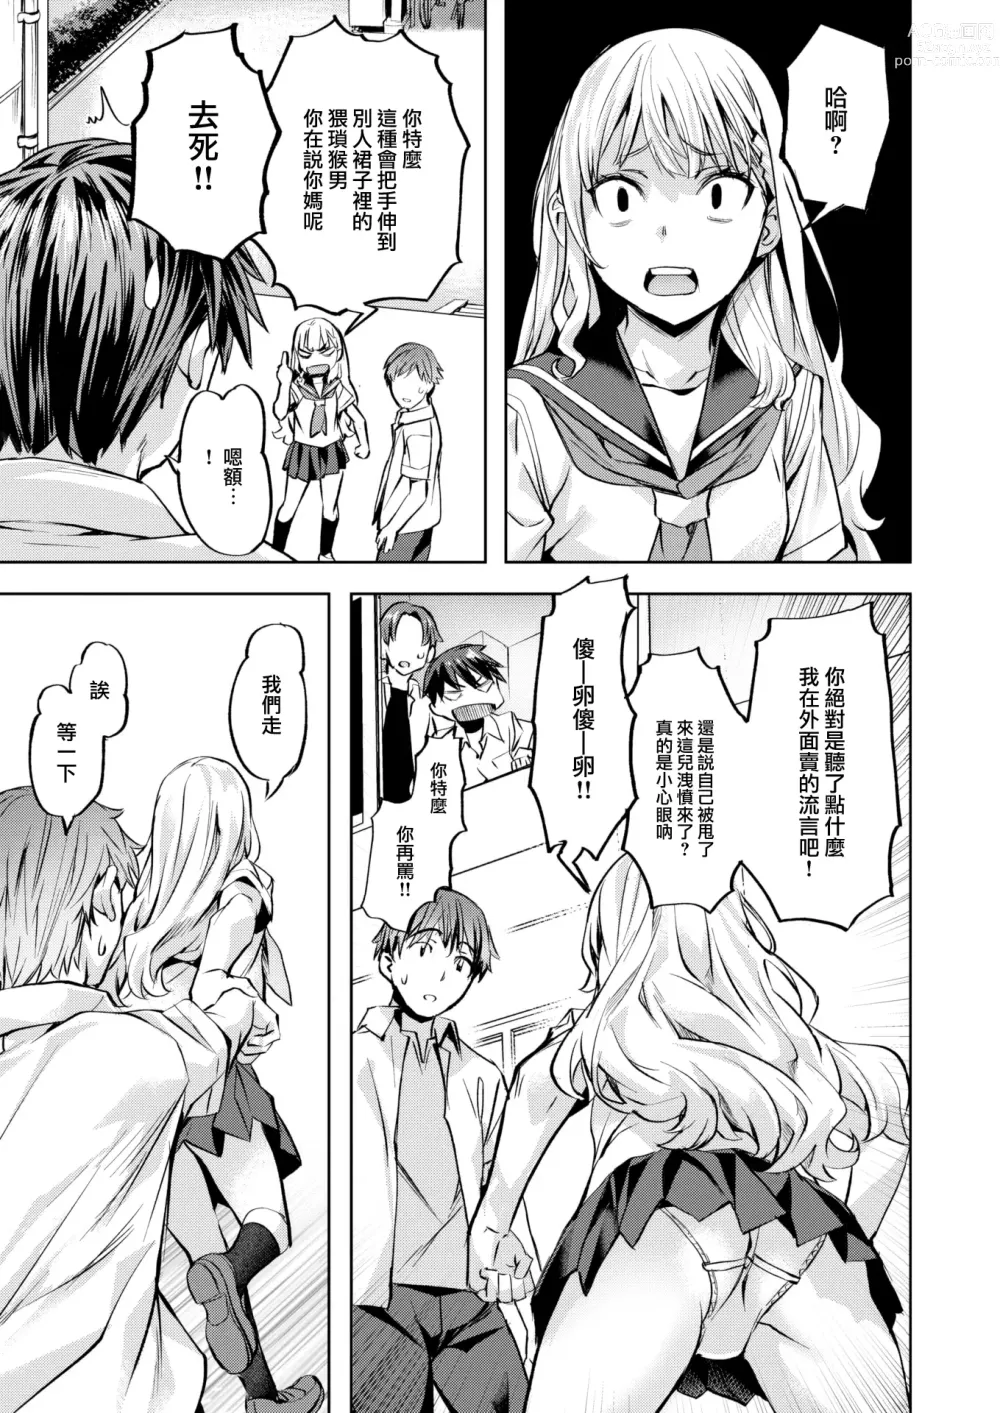 Page 10 of manga Komari Step -step1-